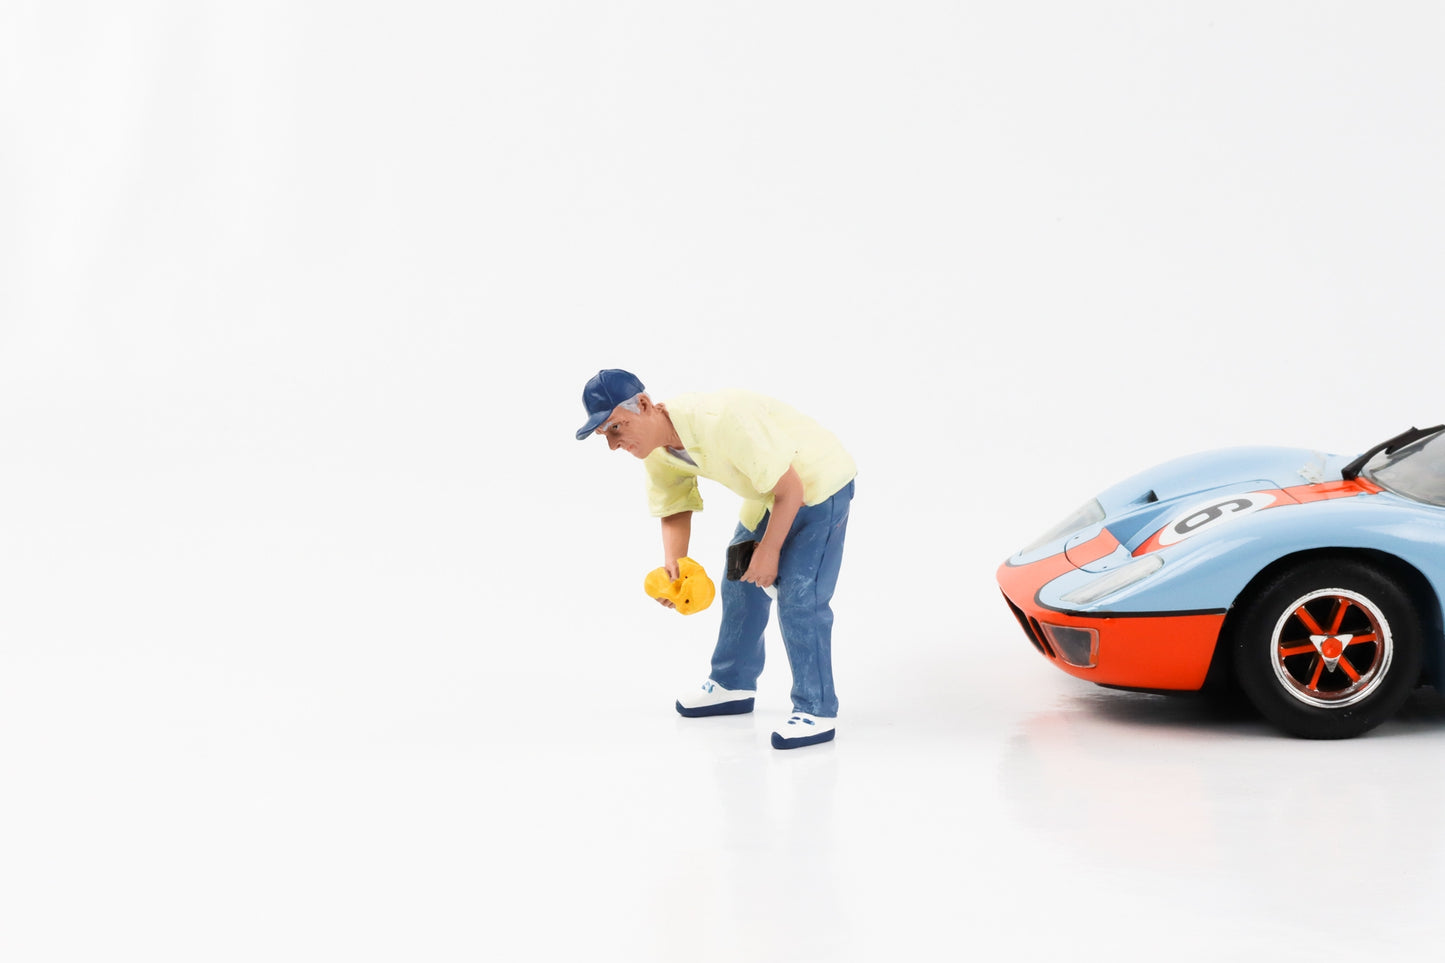 1:18 Figur Weekend Car Show Polierer Mann American Diorama VI Figuren